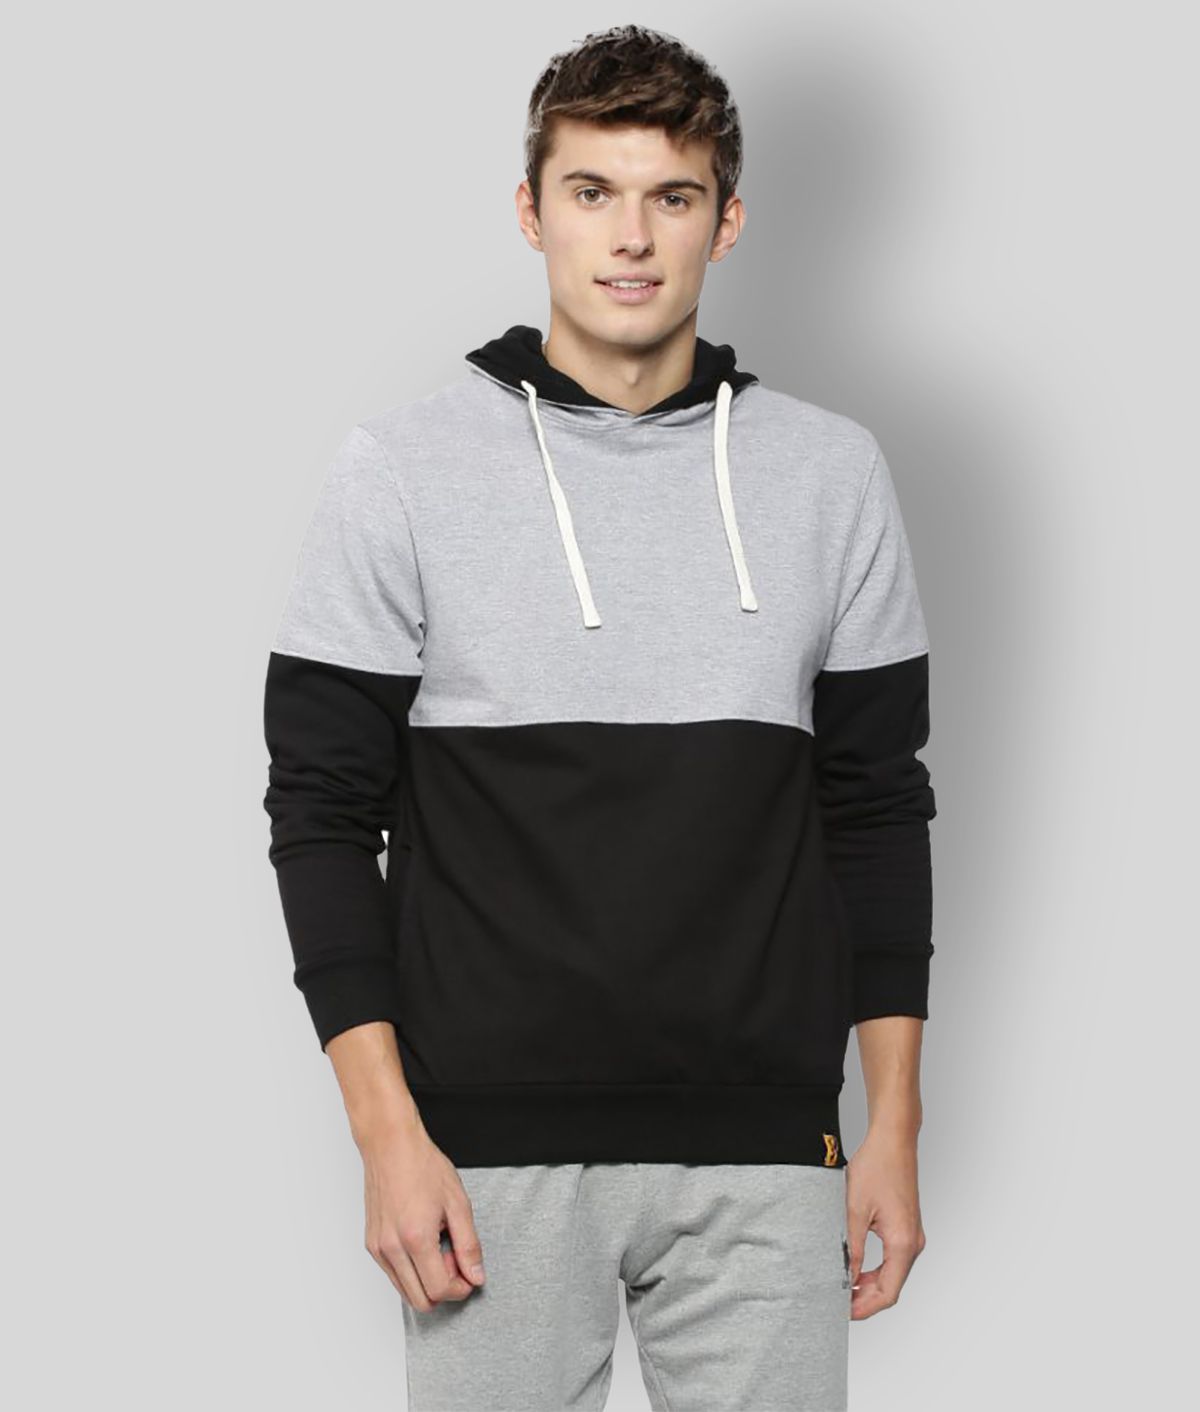     			Campus Sutra - Black Cotton Regular Fit Men's Sweatshirt ( Pack of 1 )